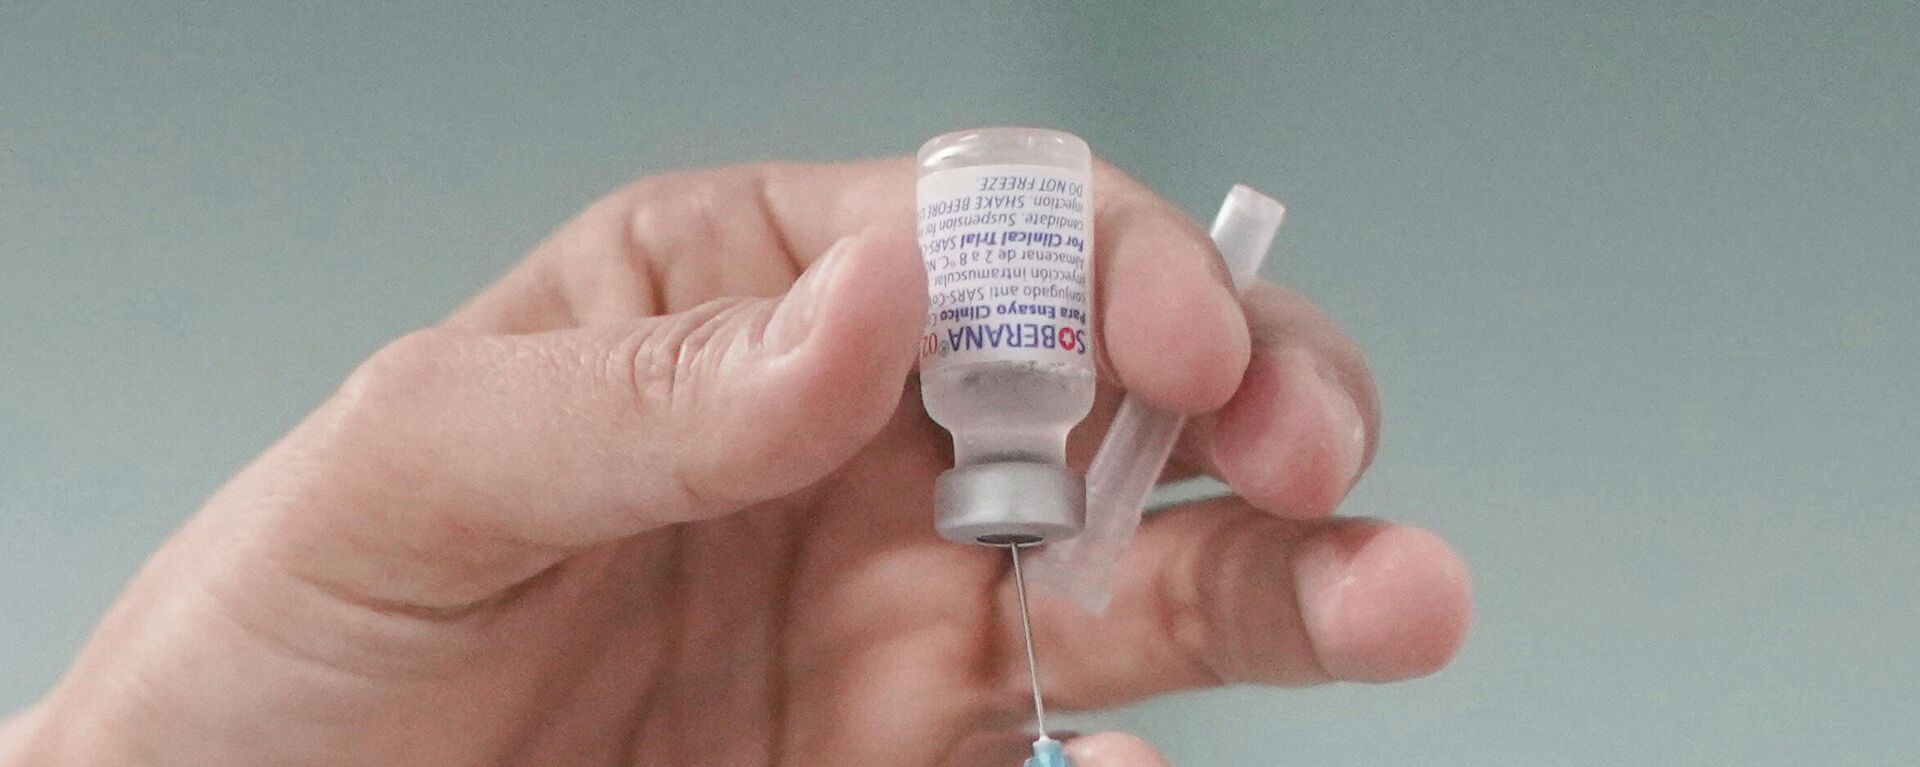 Dosis de la vacuna contra COVID-19 Soberana 2 - Sputnik Mundo, 1920, 19.07.2021